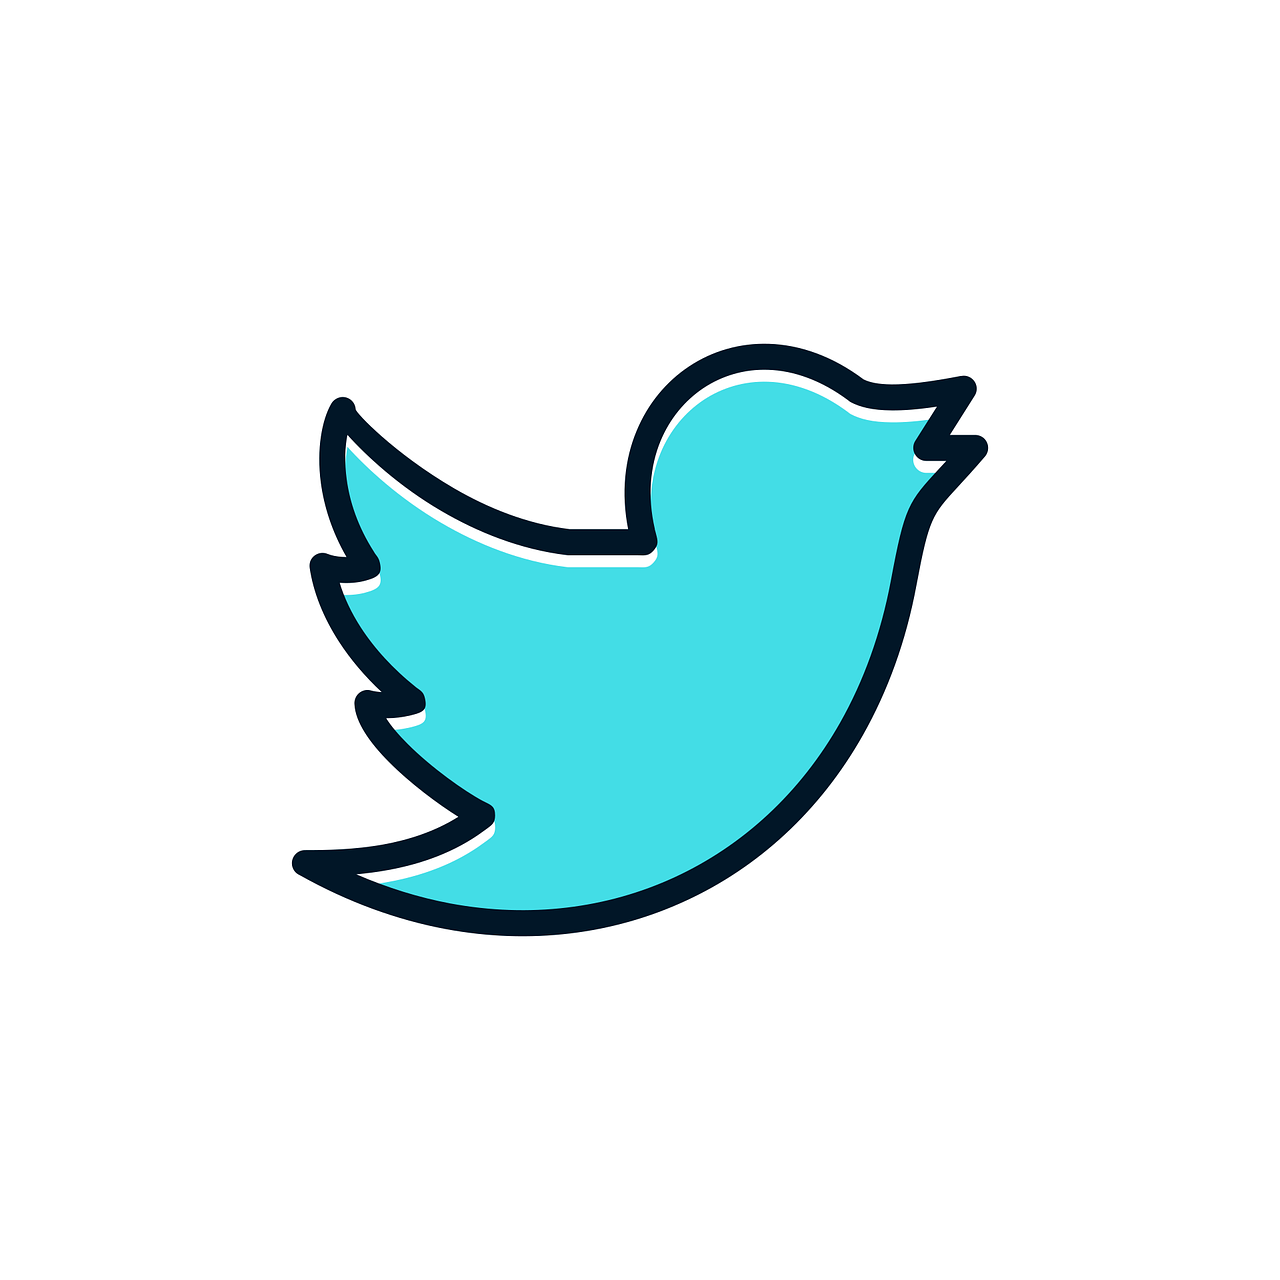 Twitter, Čivināšana, Twitter Piktograma, Twitter Logotipas, Twitter Simbolis, Socialiniai Tinklai, Tinklai, Internetas, Tinklas, Socialinis